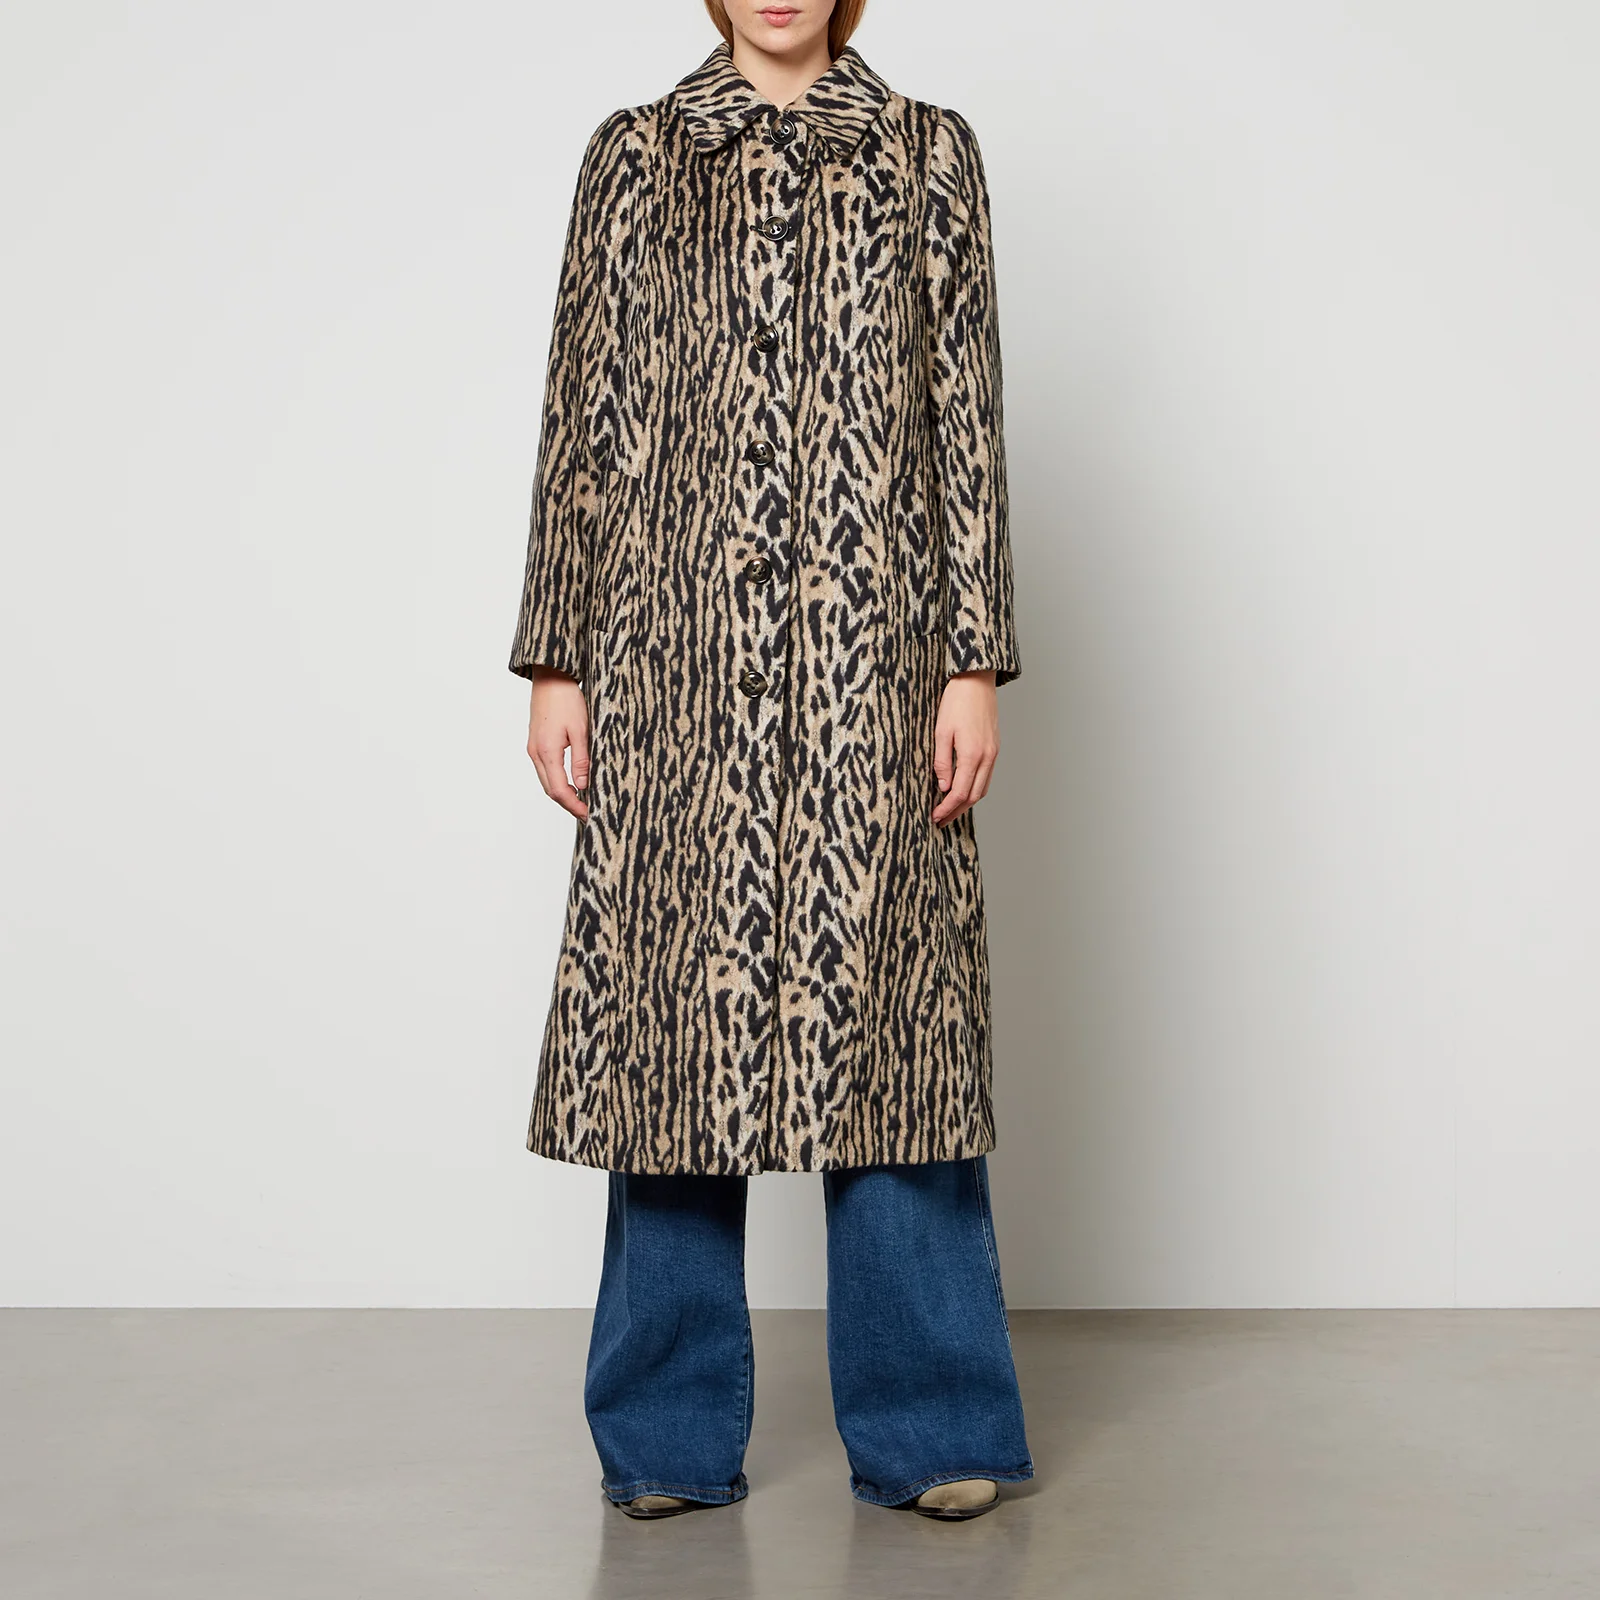 RIXO Milly Leopard-Print Faux Fur Coat Image 1